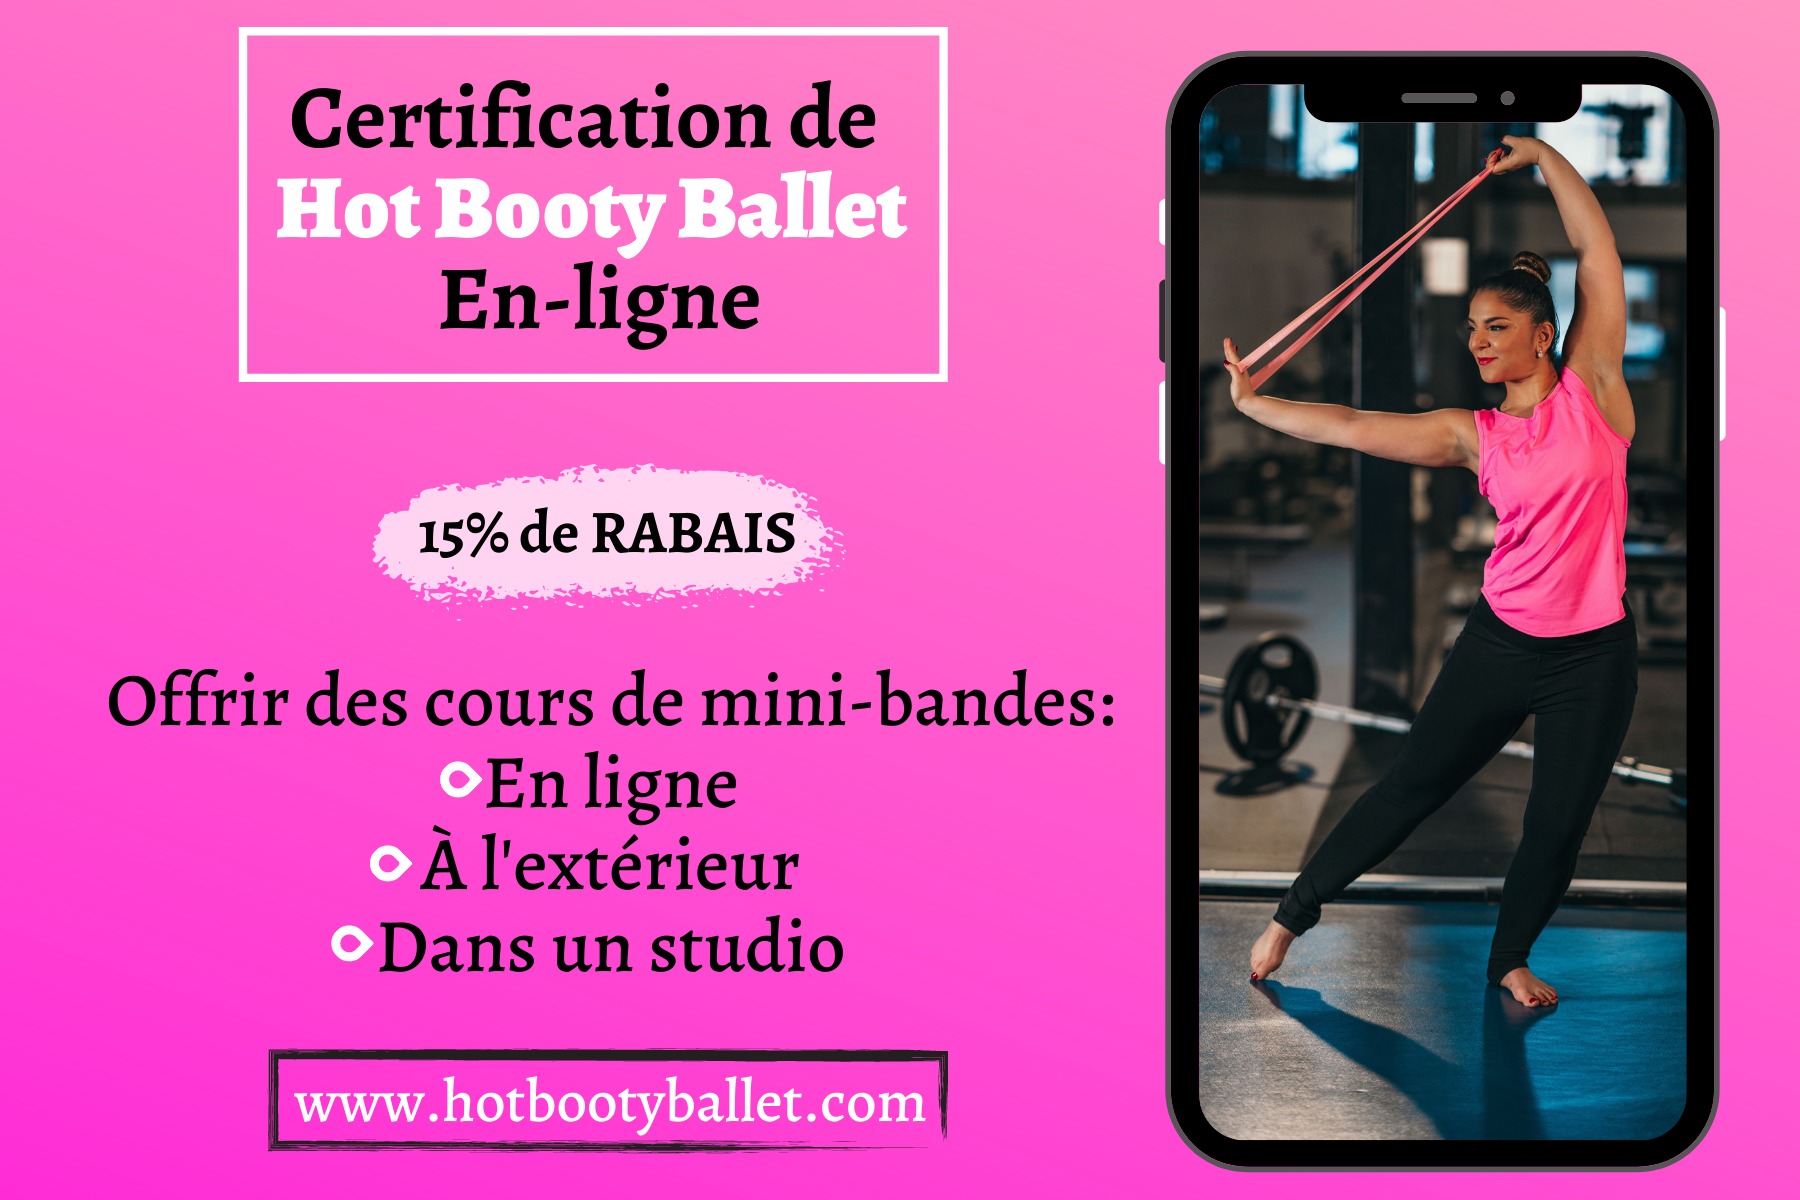 hot body ballet - Franco event ad